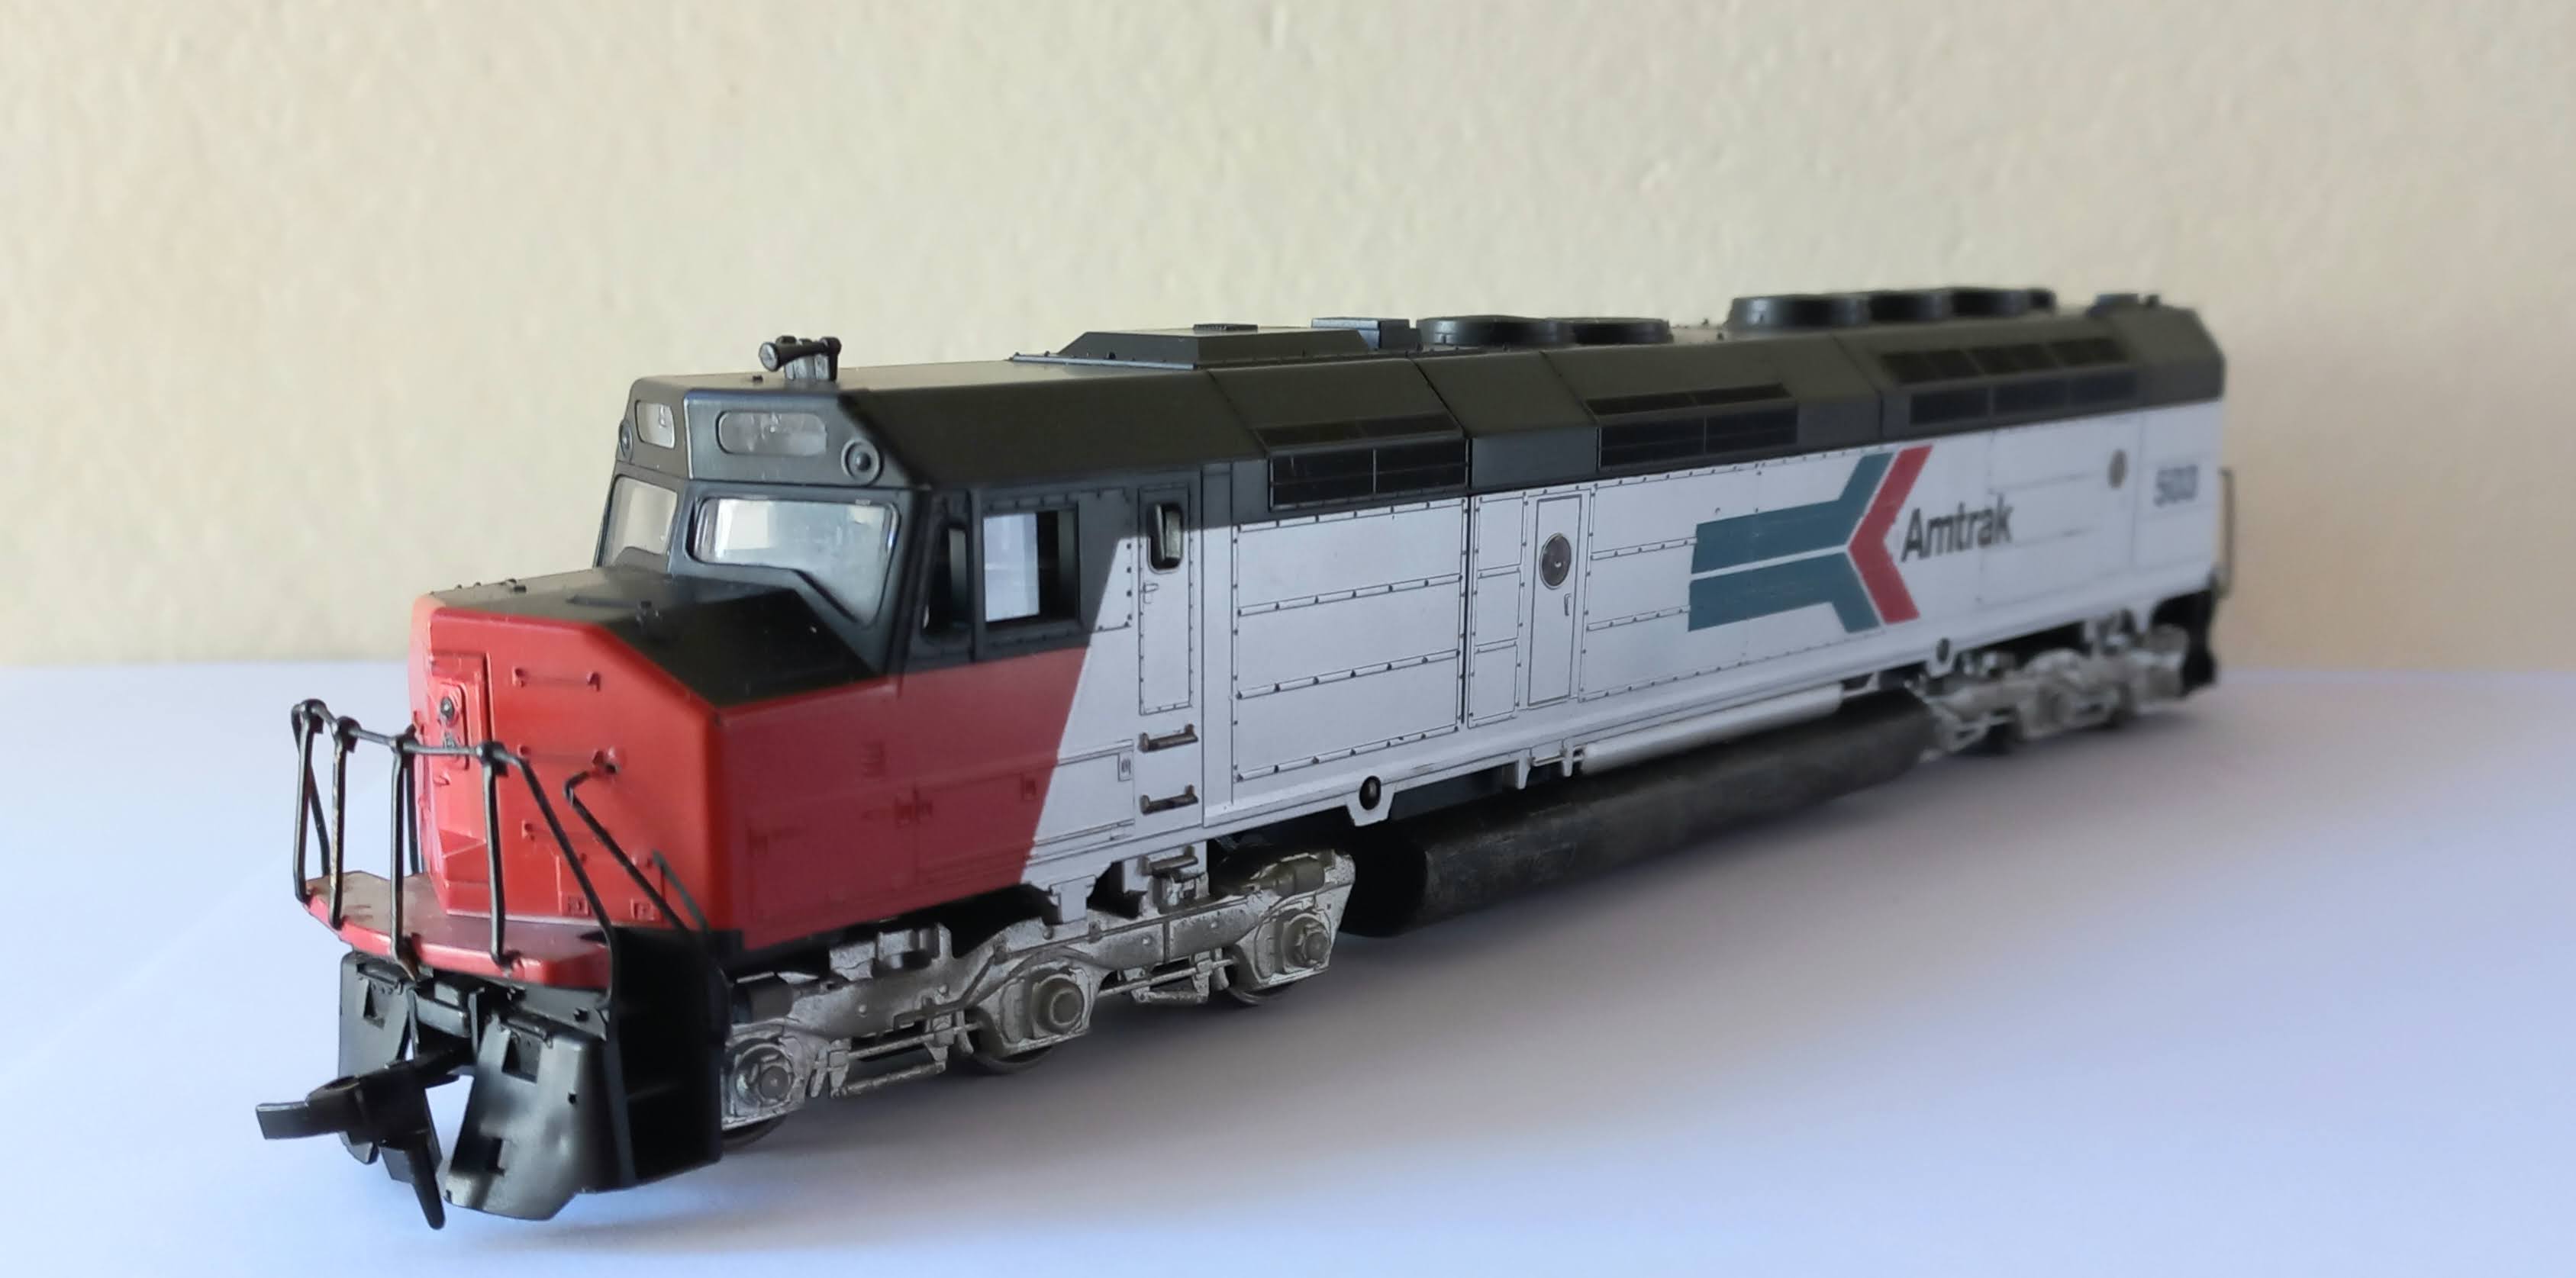 Athearn - Locomotiva Ho  EMD  FP 45 Antrak # 503- (conservada e revisada) 